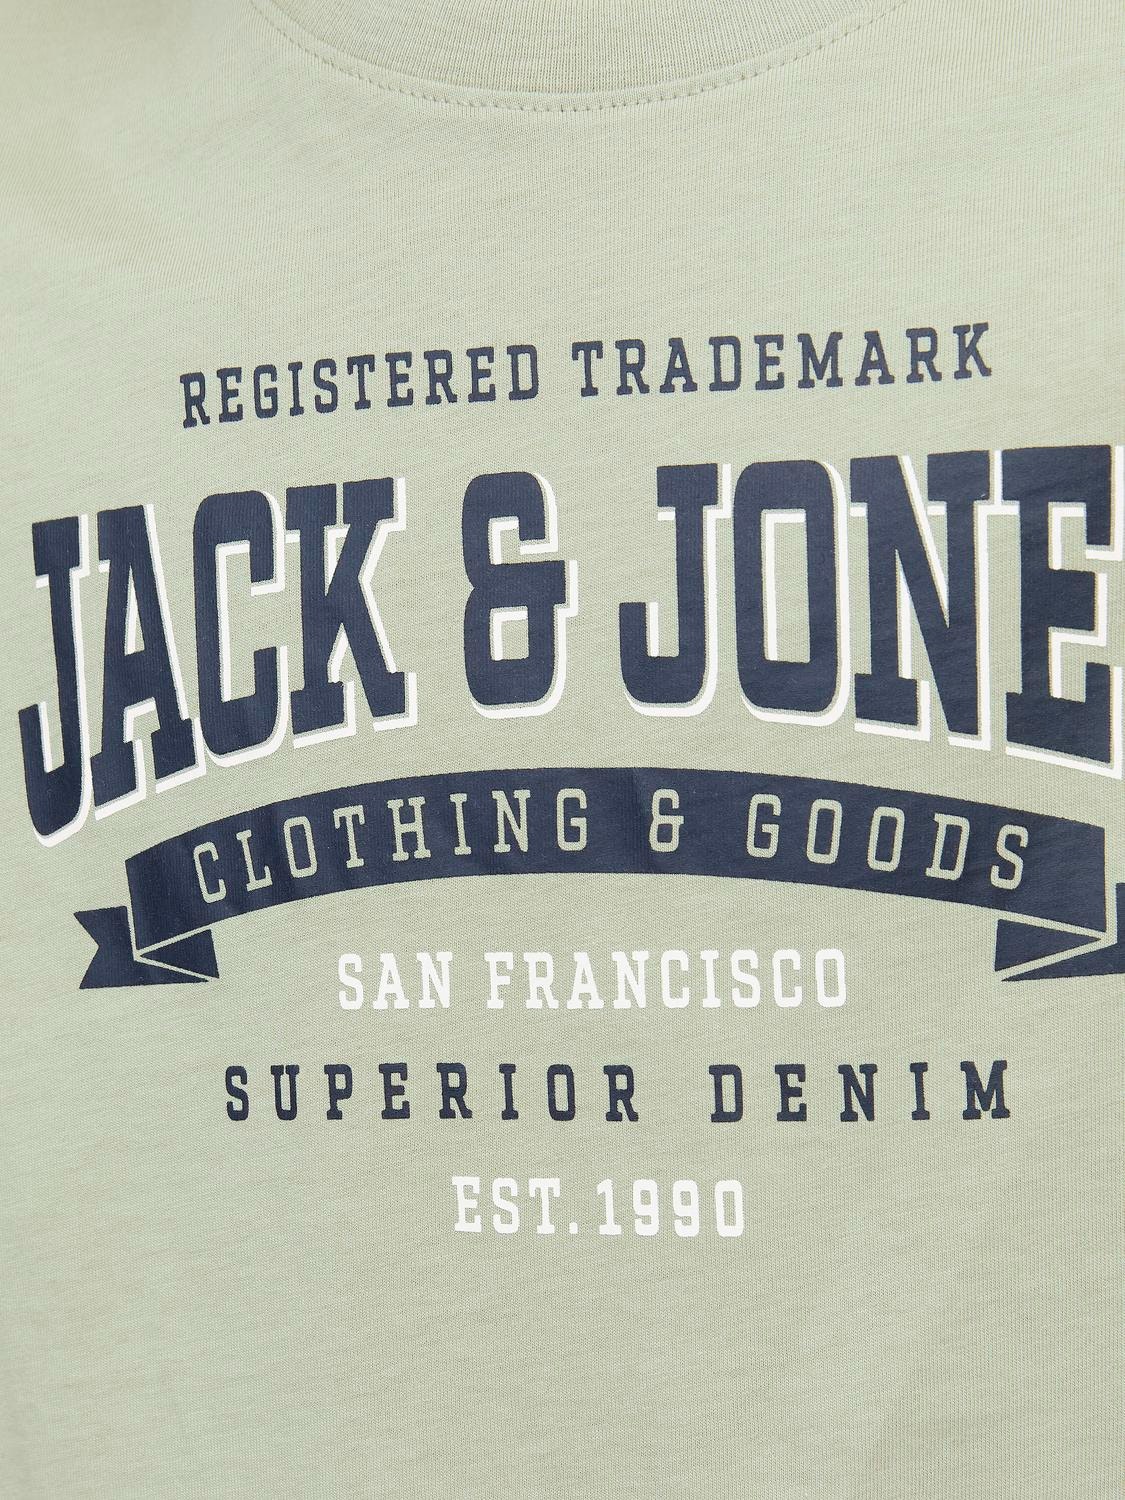 Jack & Jones Potištěný Tričko Mini -Desert Sage - 12257379